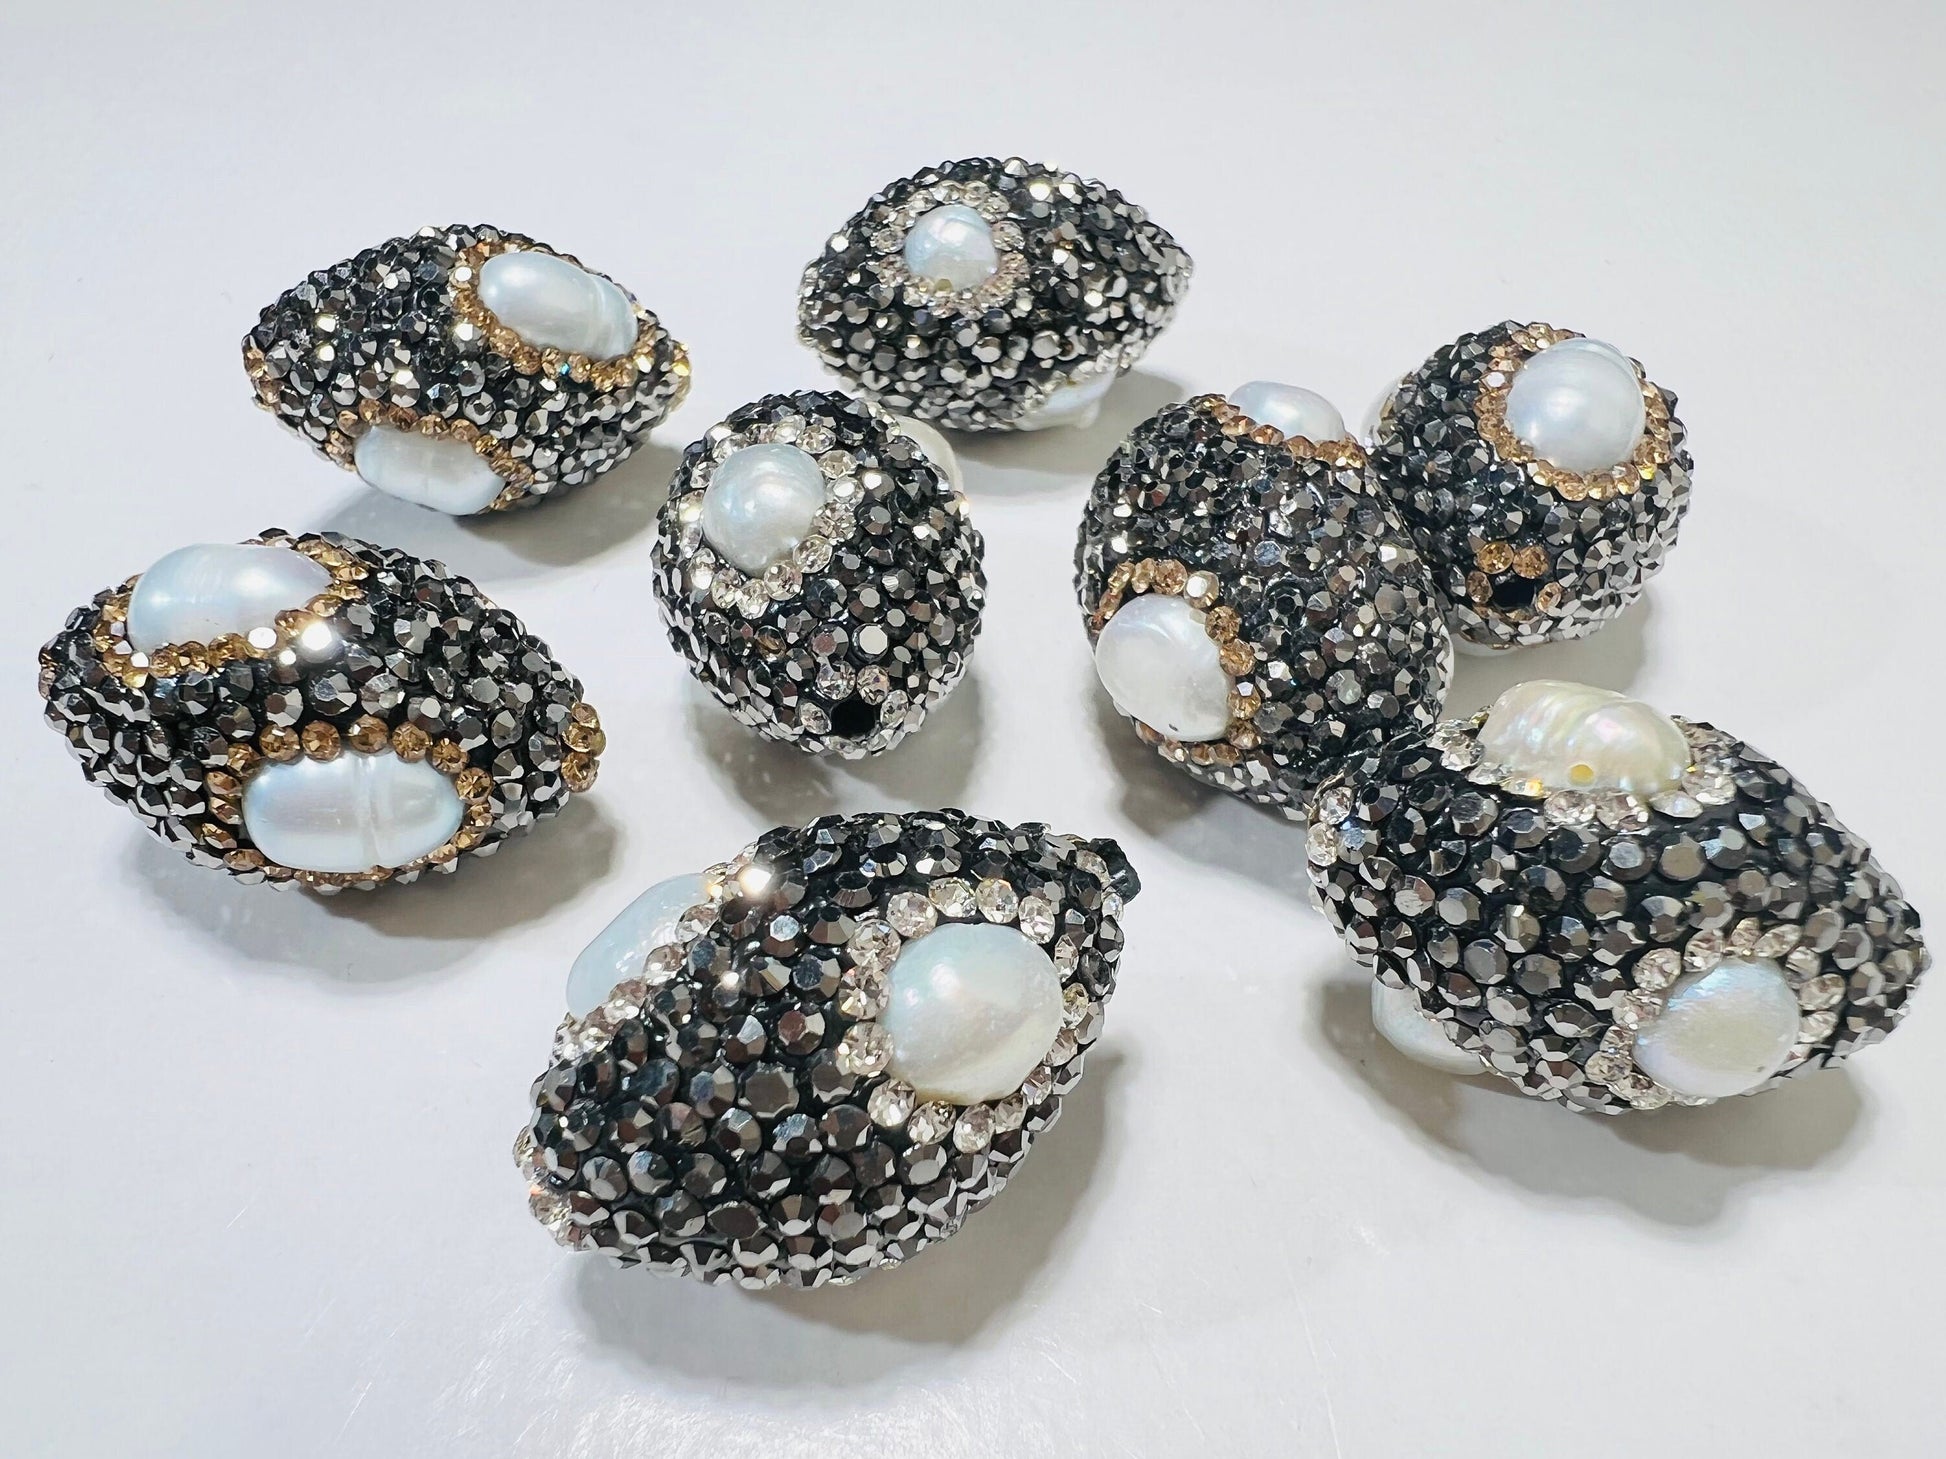 Freshwater Keshi Pearl, Inlaid Black Rhinestone Crystal Handmade Fancy Focal Bead, 17x24mm, 1 pc, Jewelry Making Bling Oval Spacer Bead